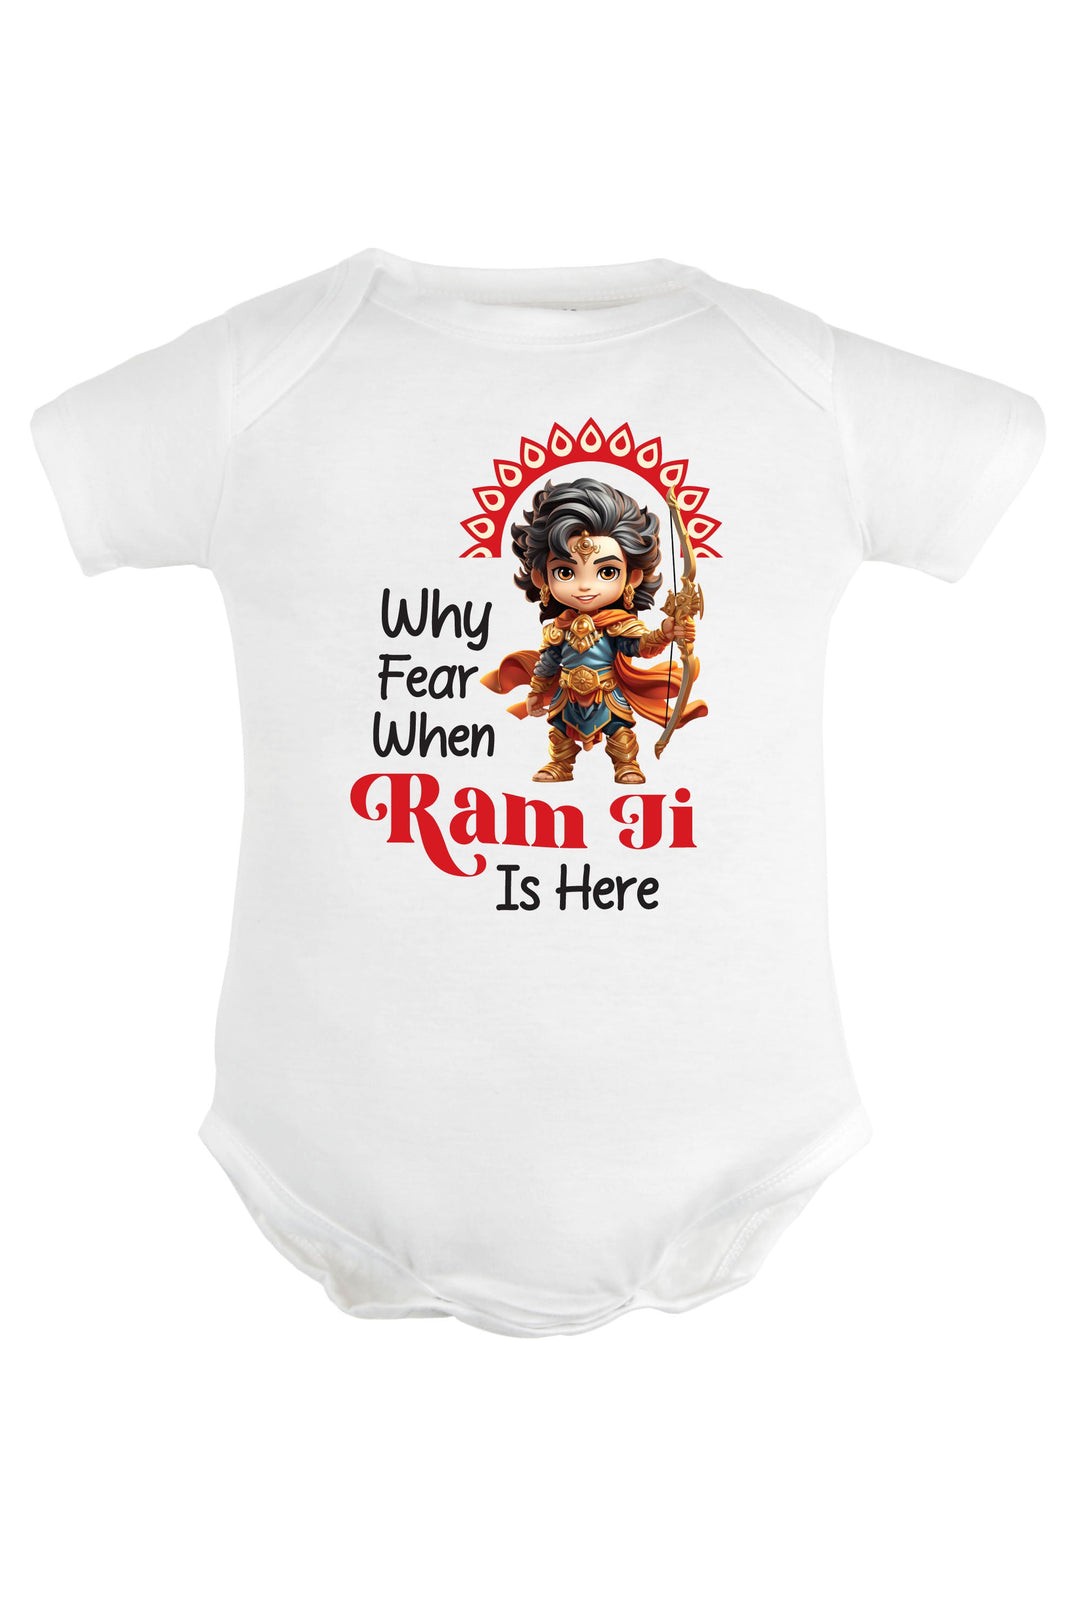 Why Fear When Ram ji Is Here Baby Romper | Onesies